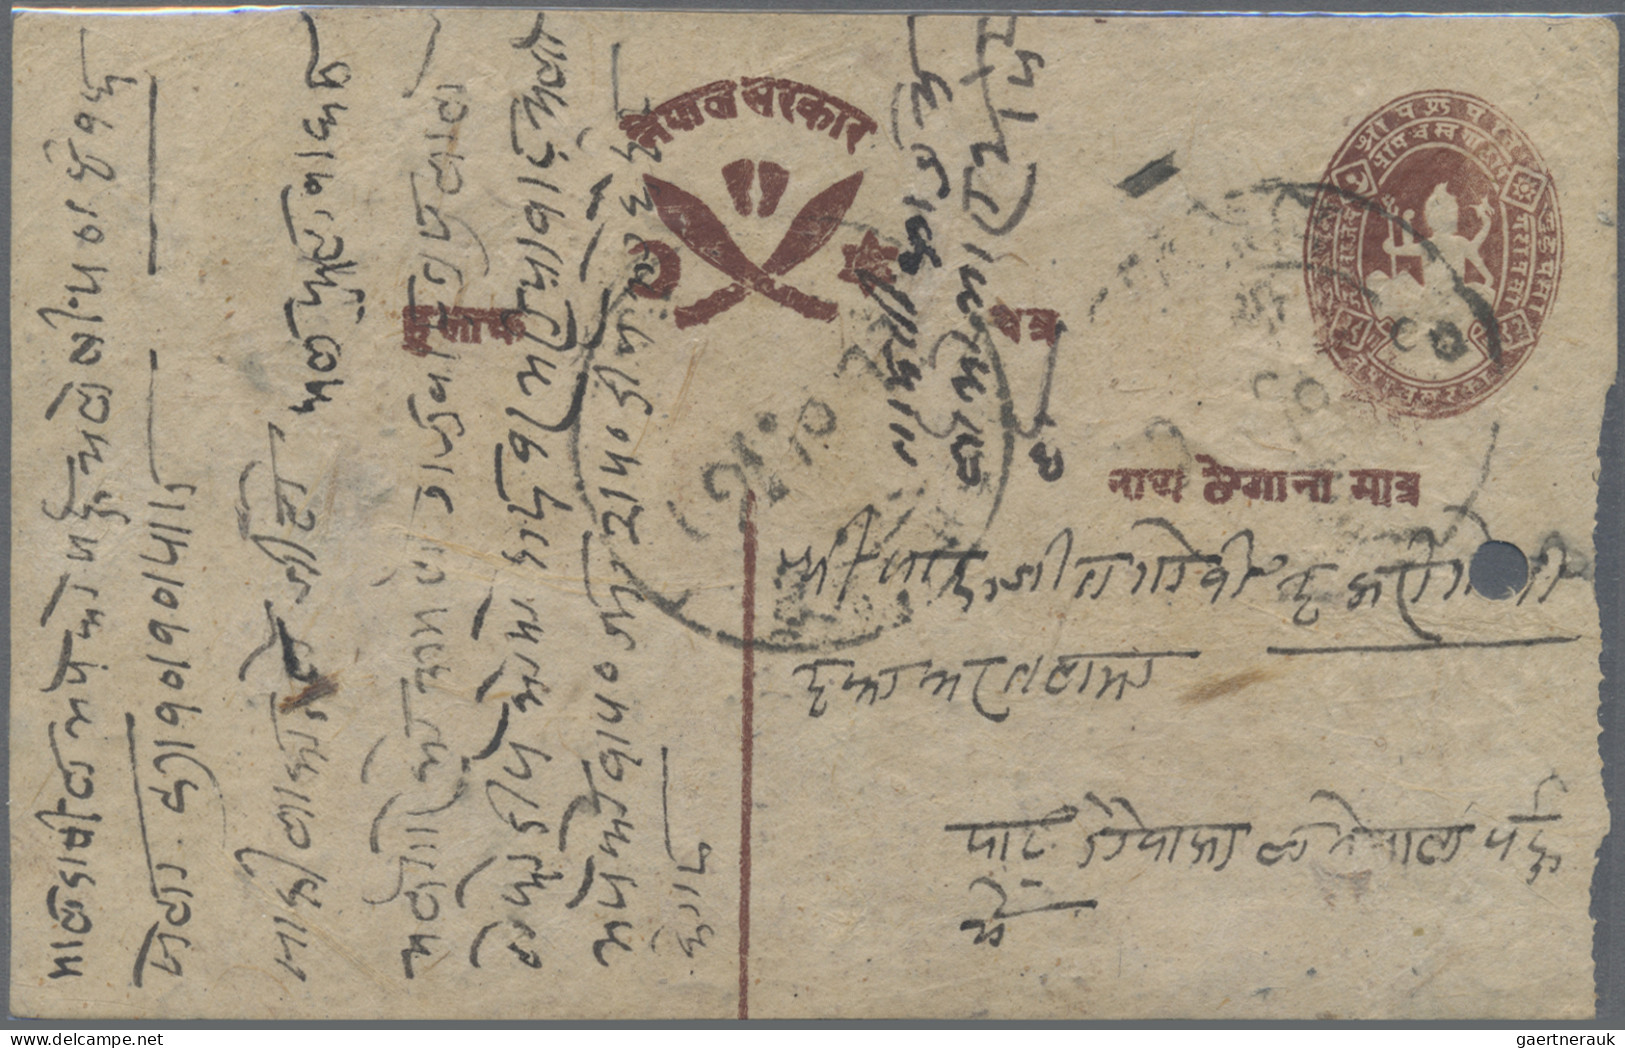 Nepal - postal stationery: 1880's-1980's: Collection of 58 postal stationery car